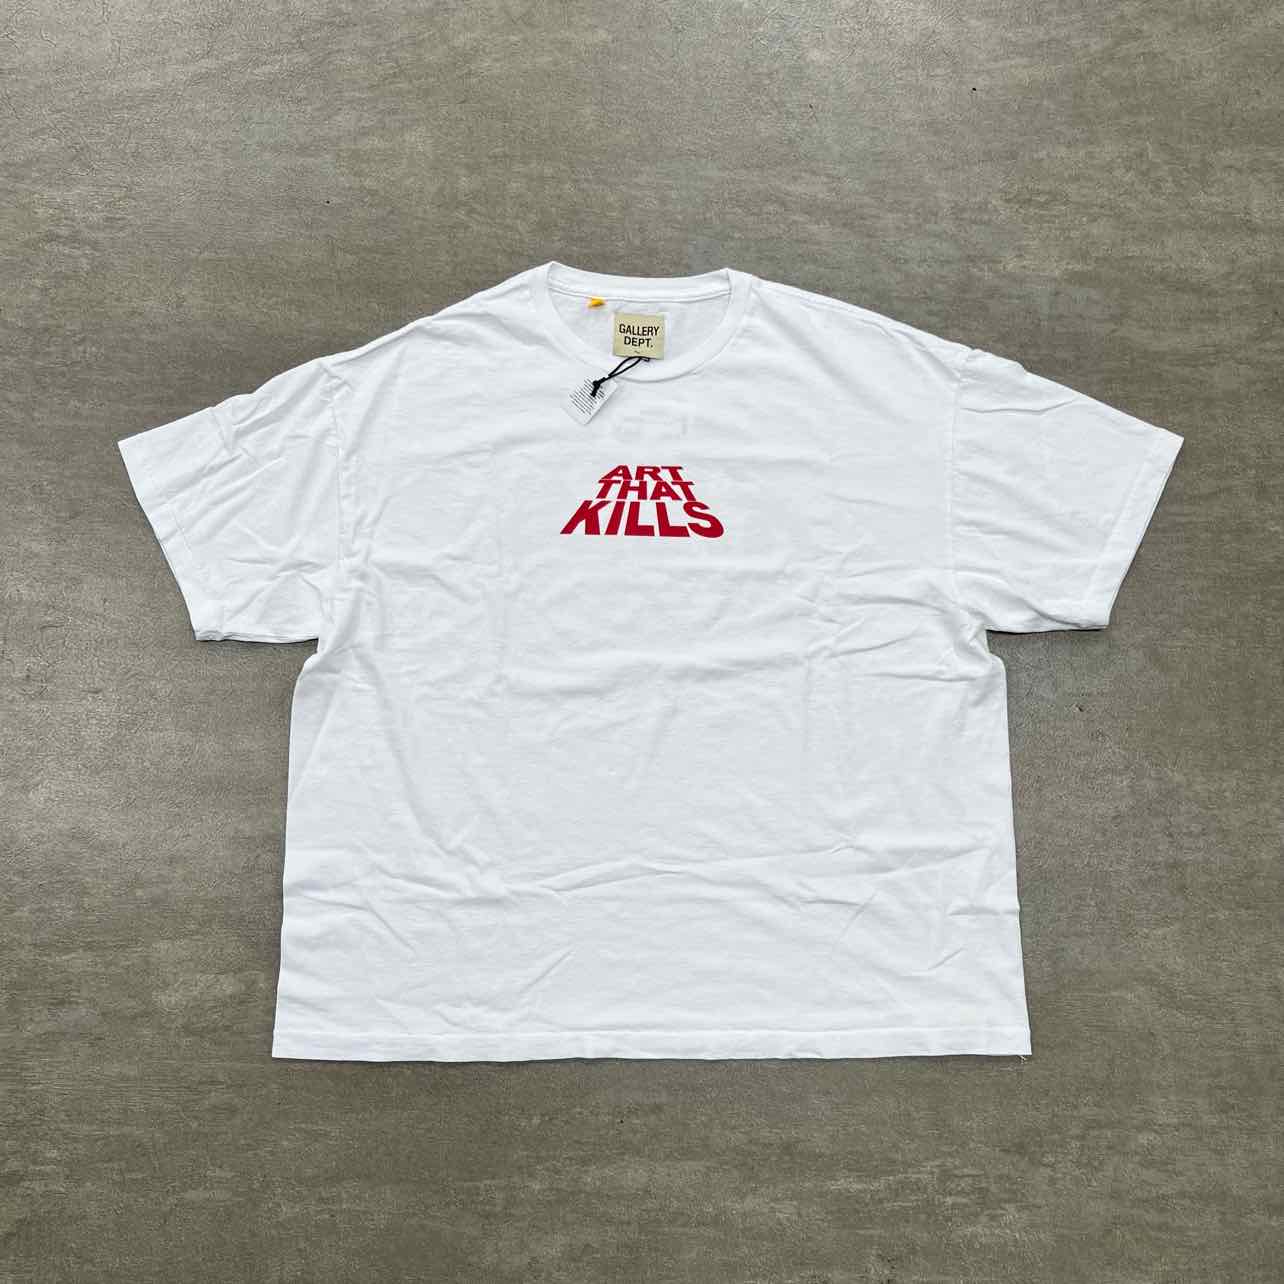 Gallery DEPT. T-Shirt "ART THAT KILLS" White New Size L